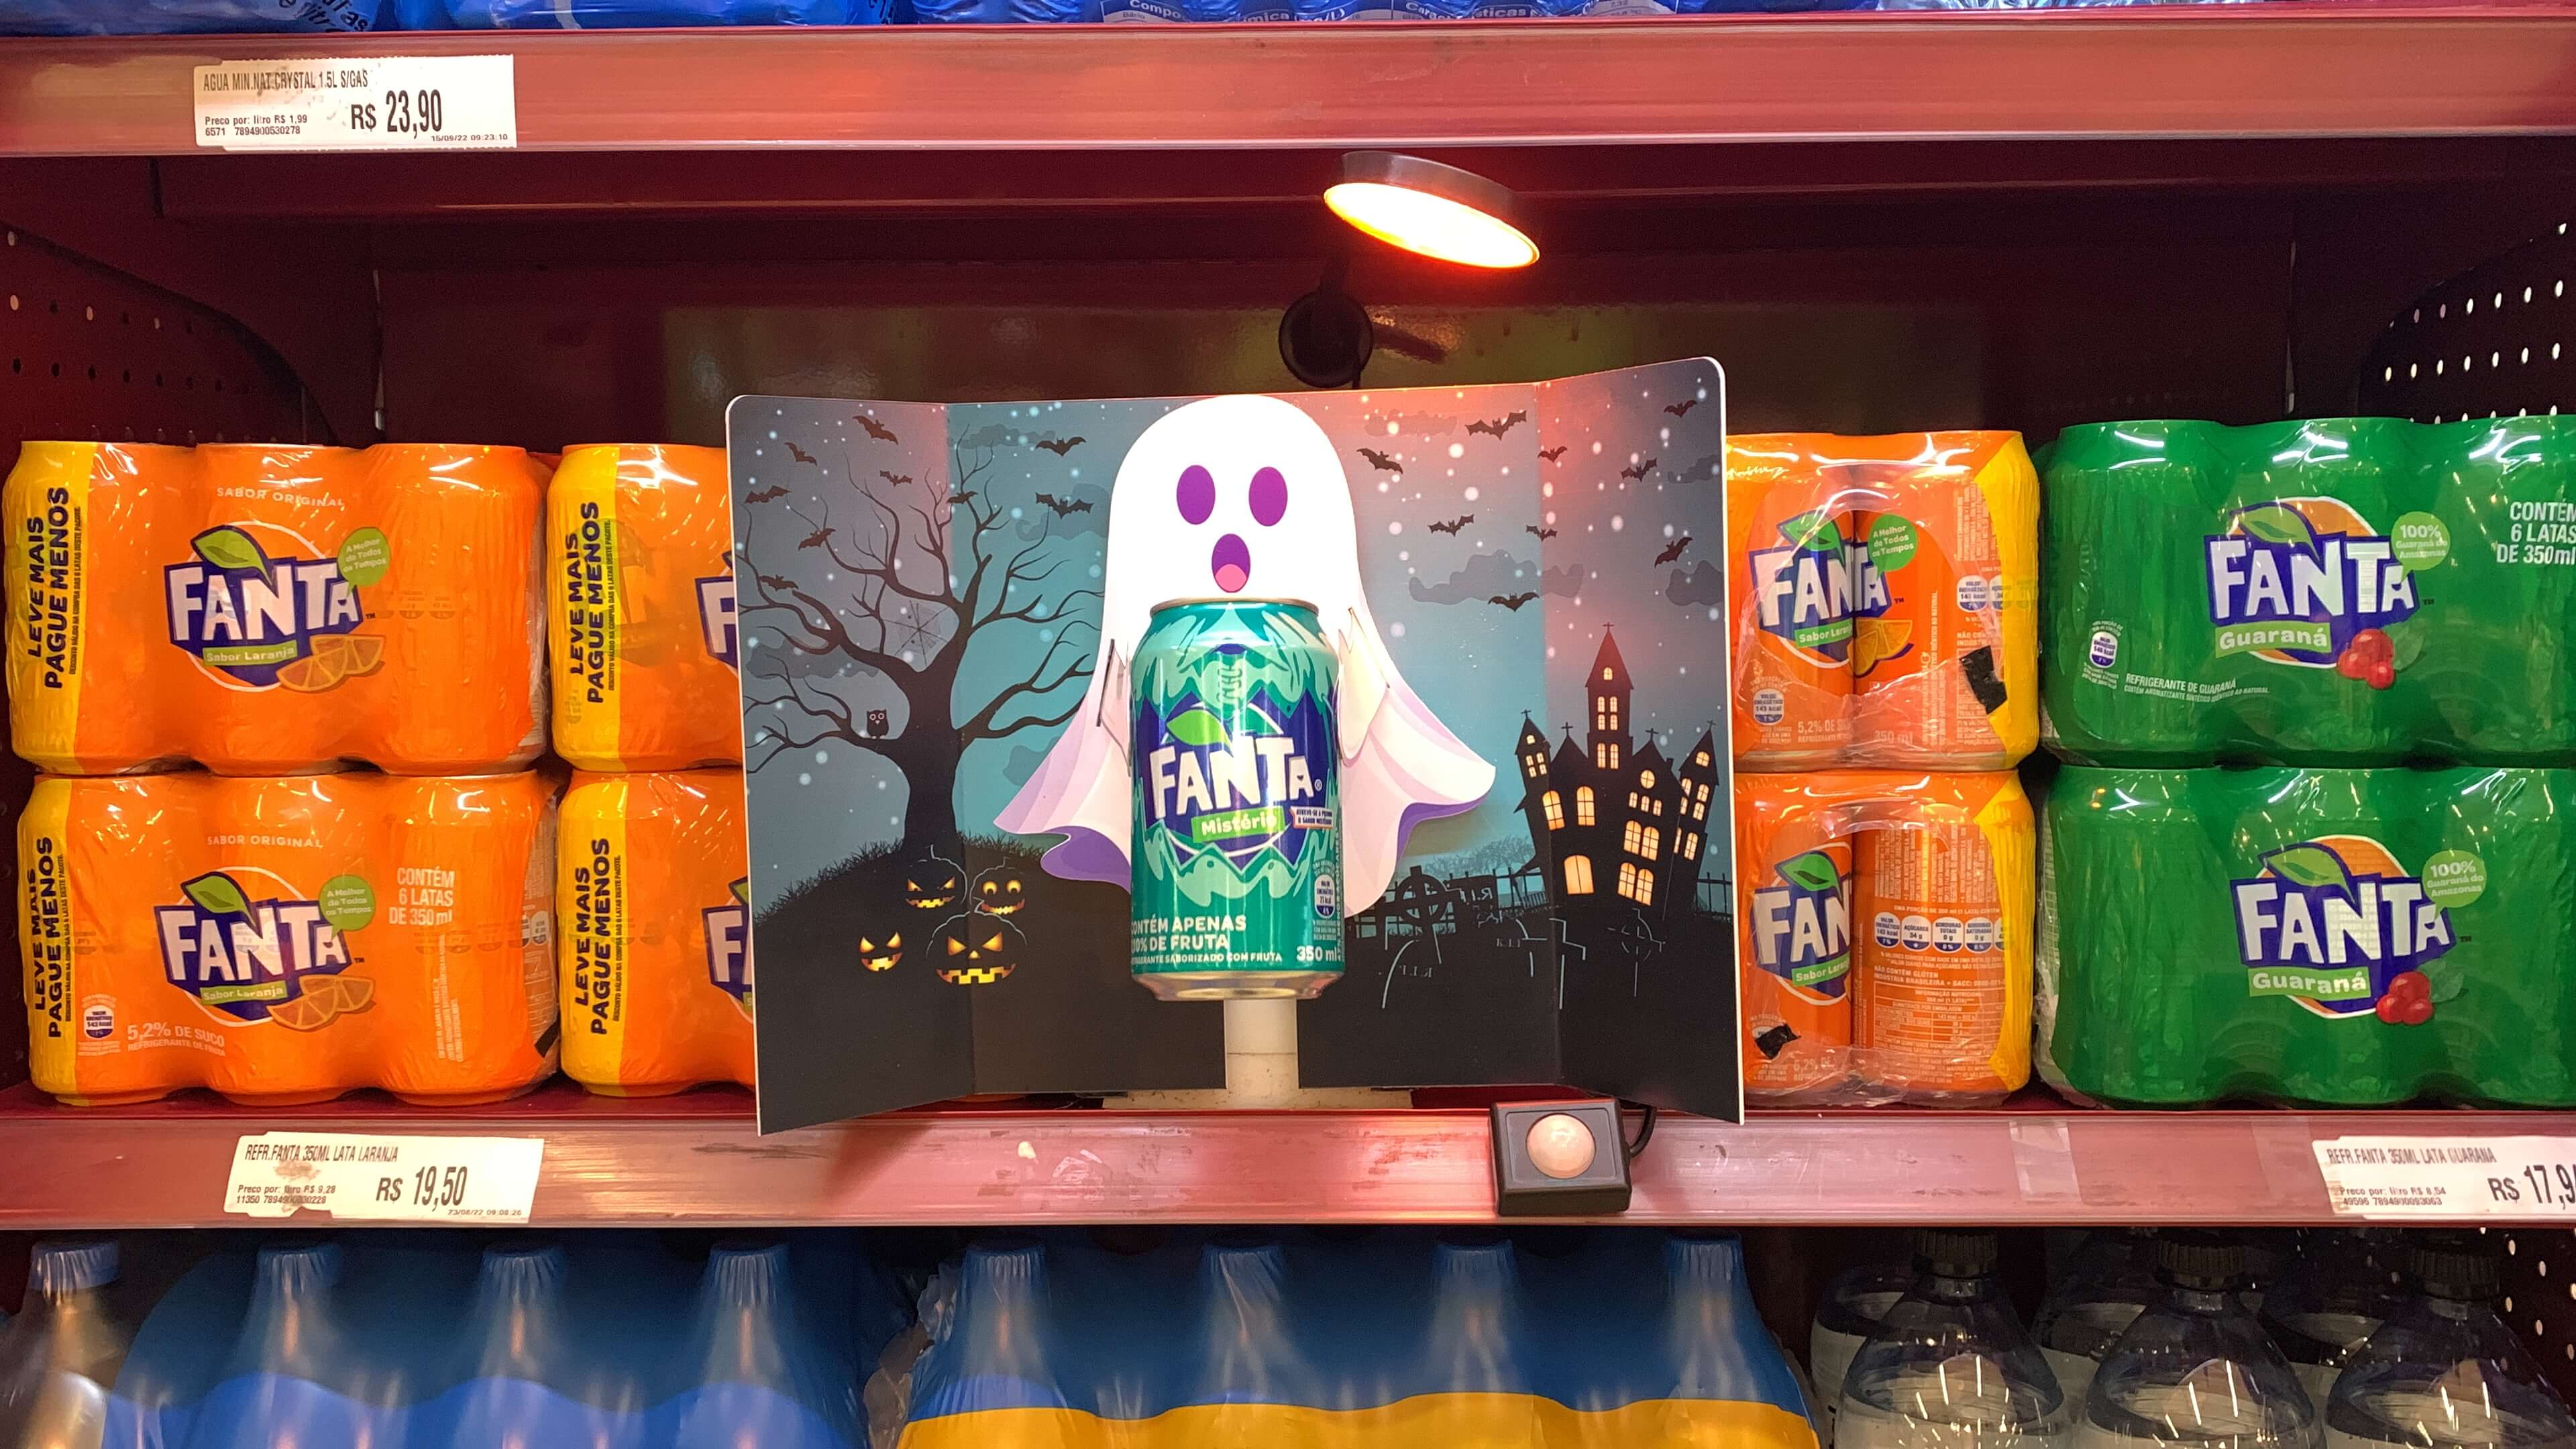 Fanta Misterio wins at seasonal marketing for Halloween campaign